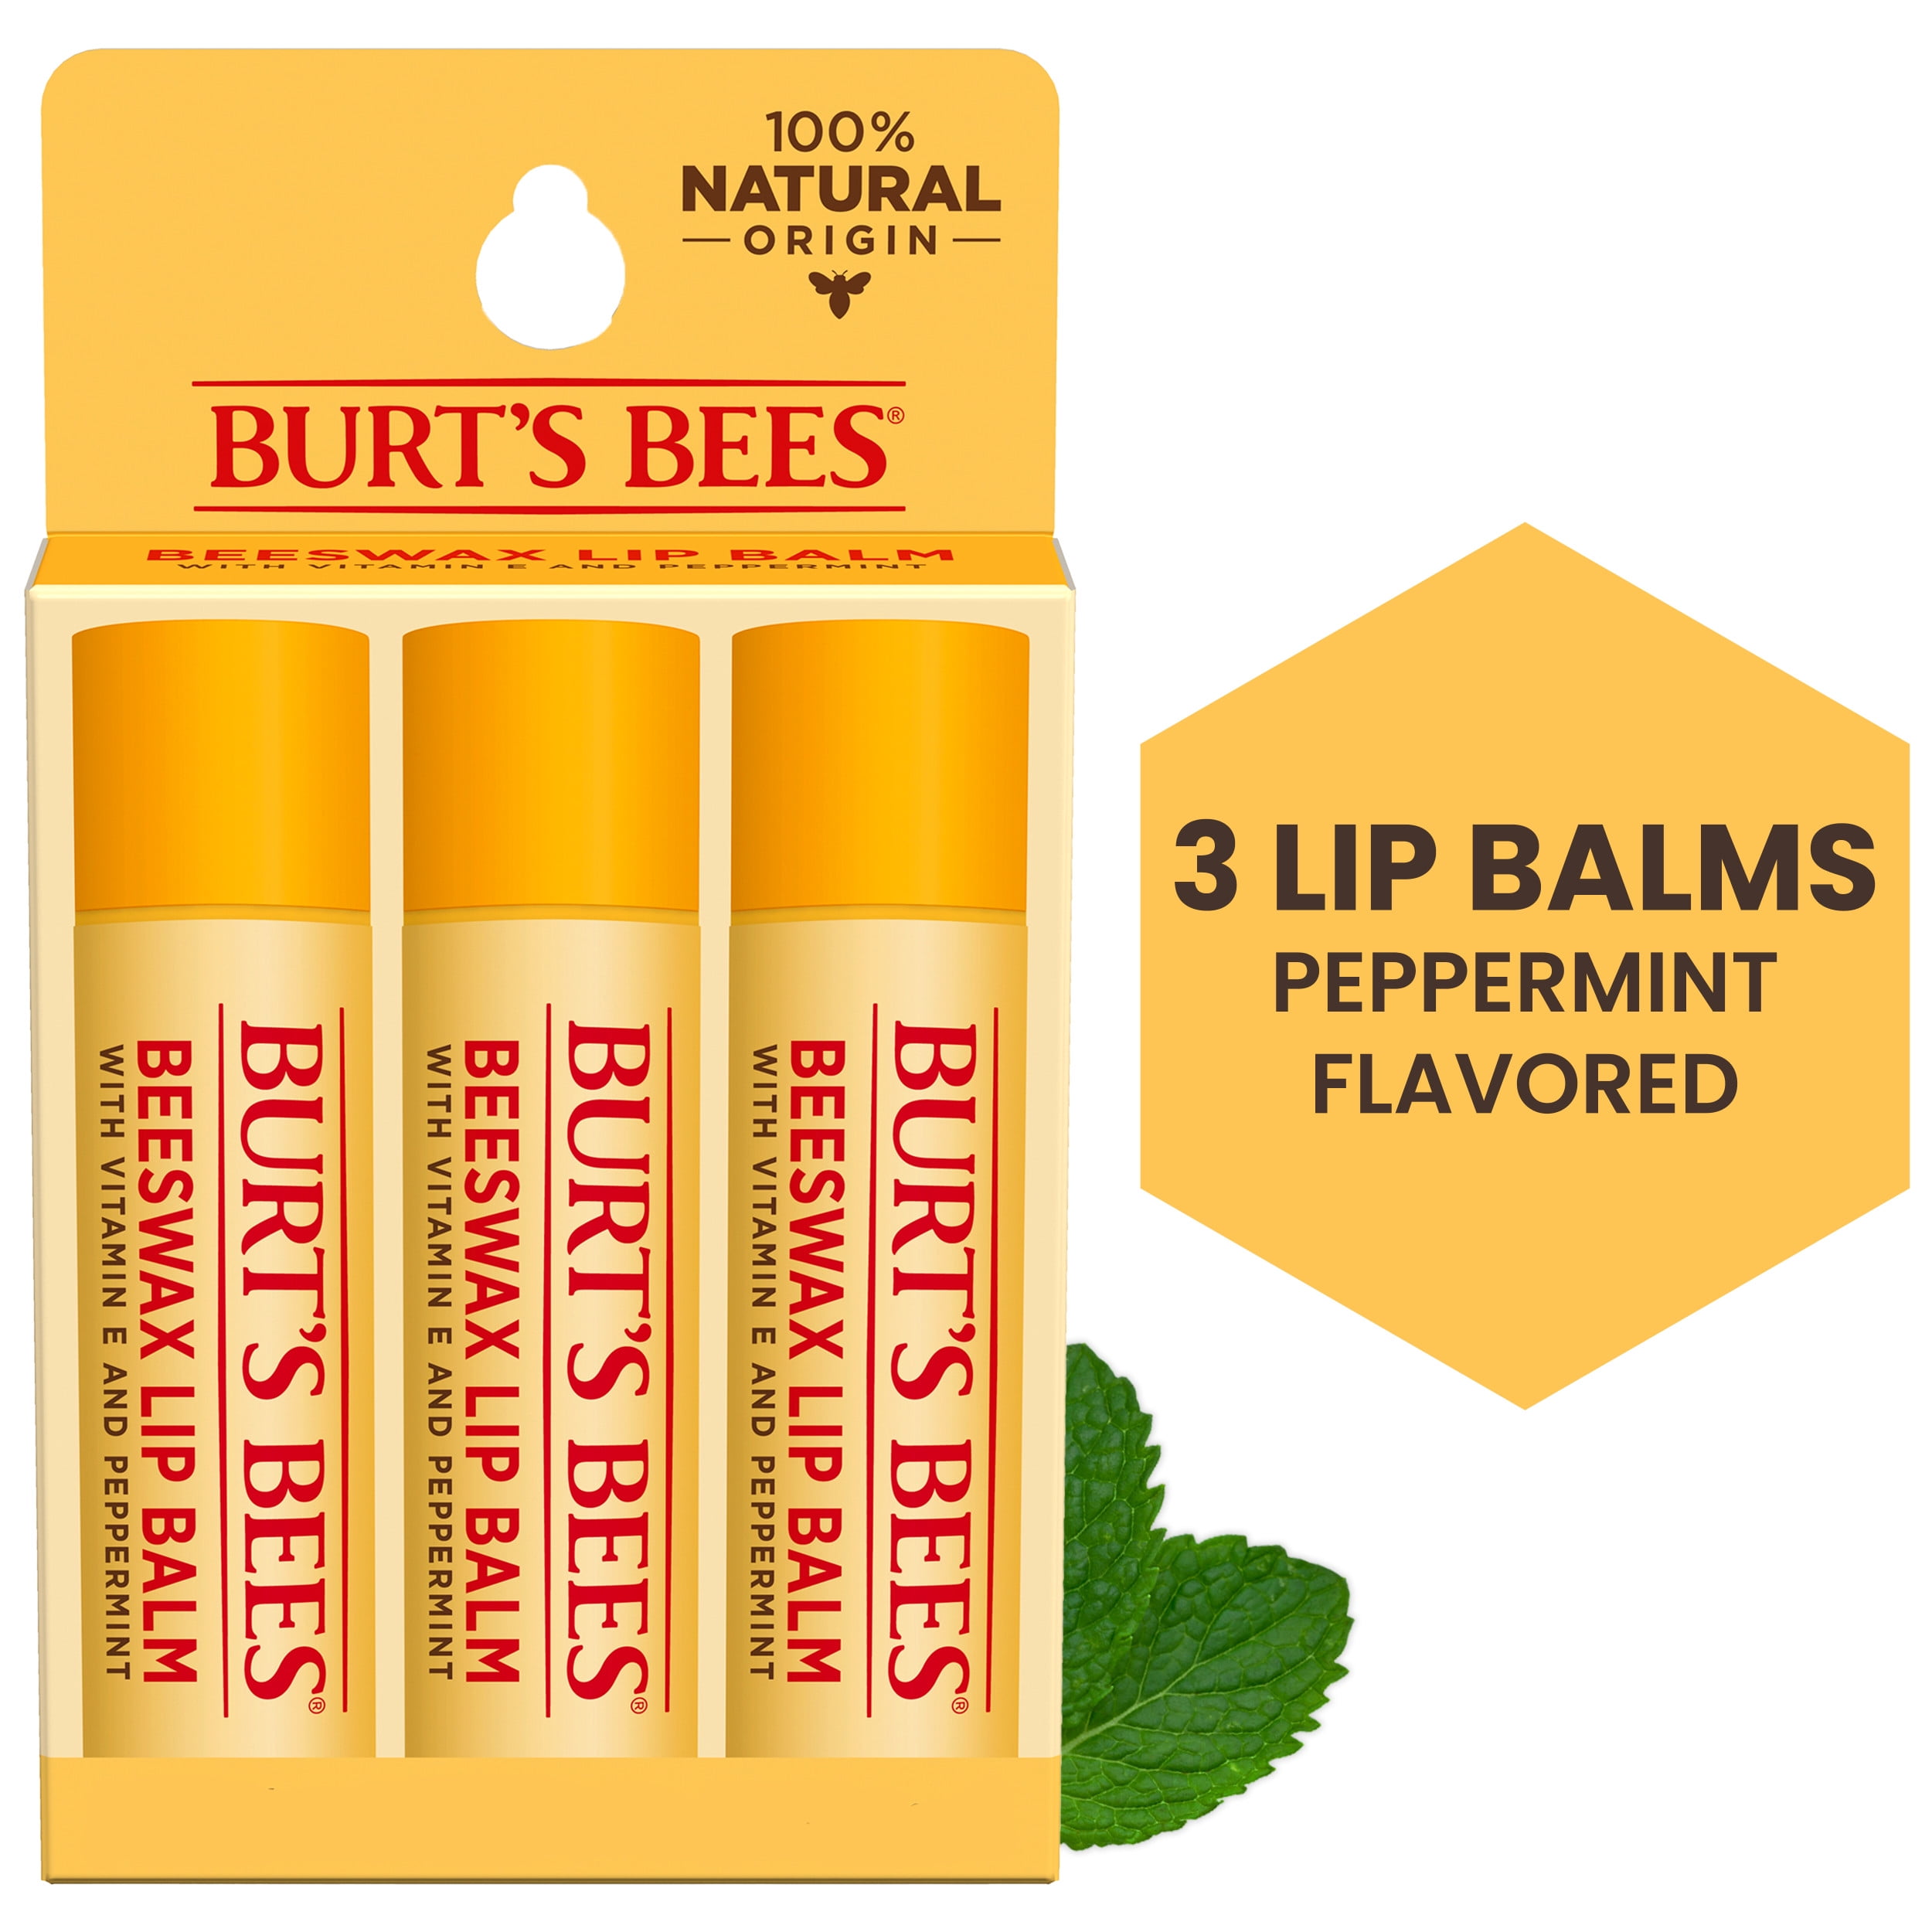 Burts Bees 100% Natural Origin Moisturizing Lip Balm, Original Beeswax,  0.15 Ounce Tube